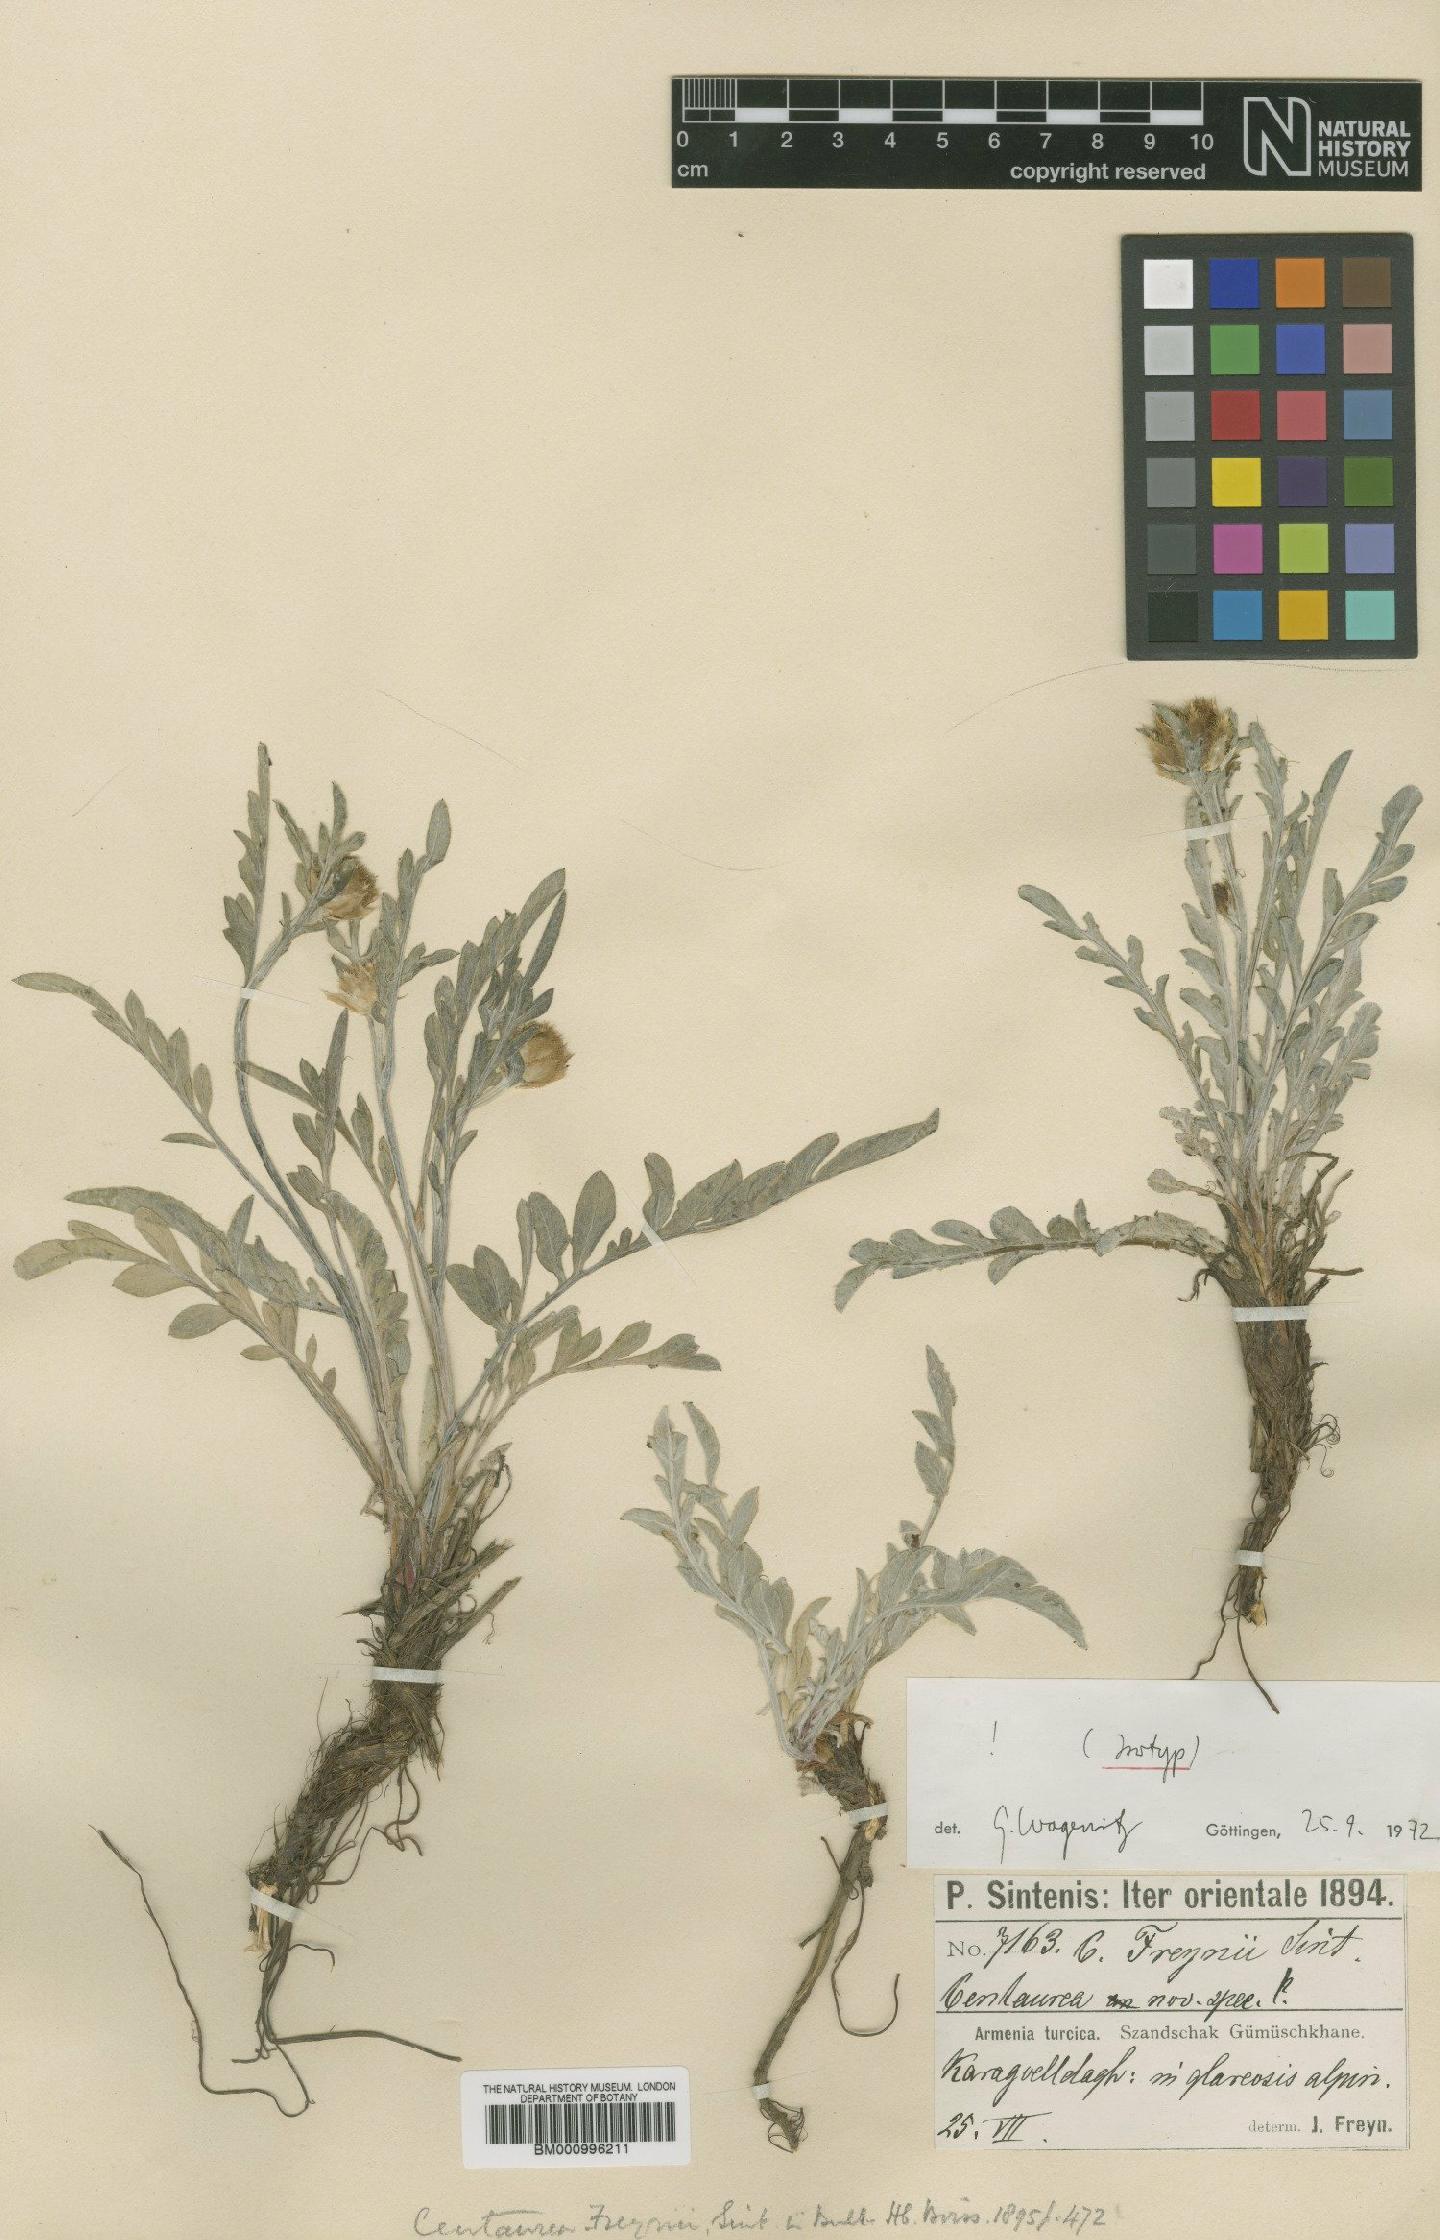 To NHMUK collection (Centaurea freynii Sint. & Freyn; Isotype; NHMUK:ecatalogue:480155)